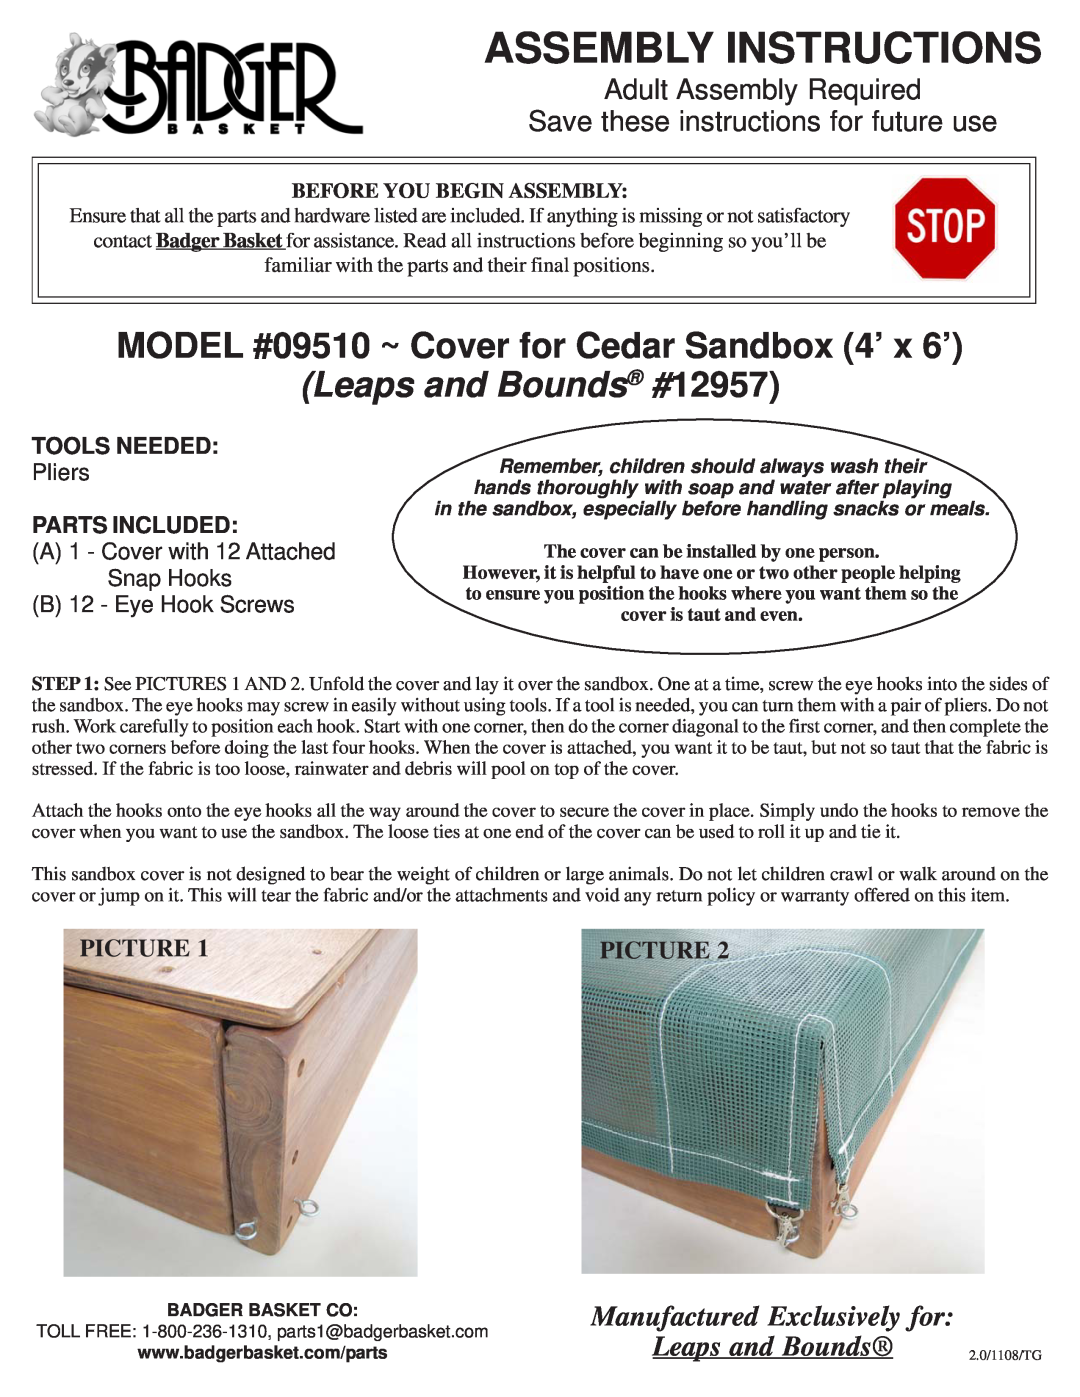 Badger Basket 09500 MODEL #09510 ~ Cover for Cedar Sandbox 4’ x 6’, Leaps and Bounds #12957, Pliers, B12 - Eye Hook Screws 